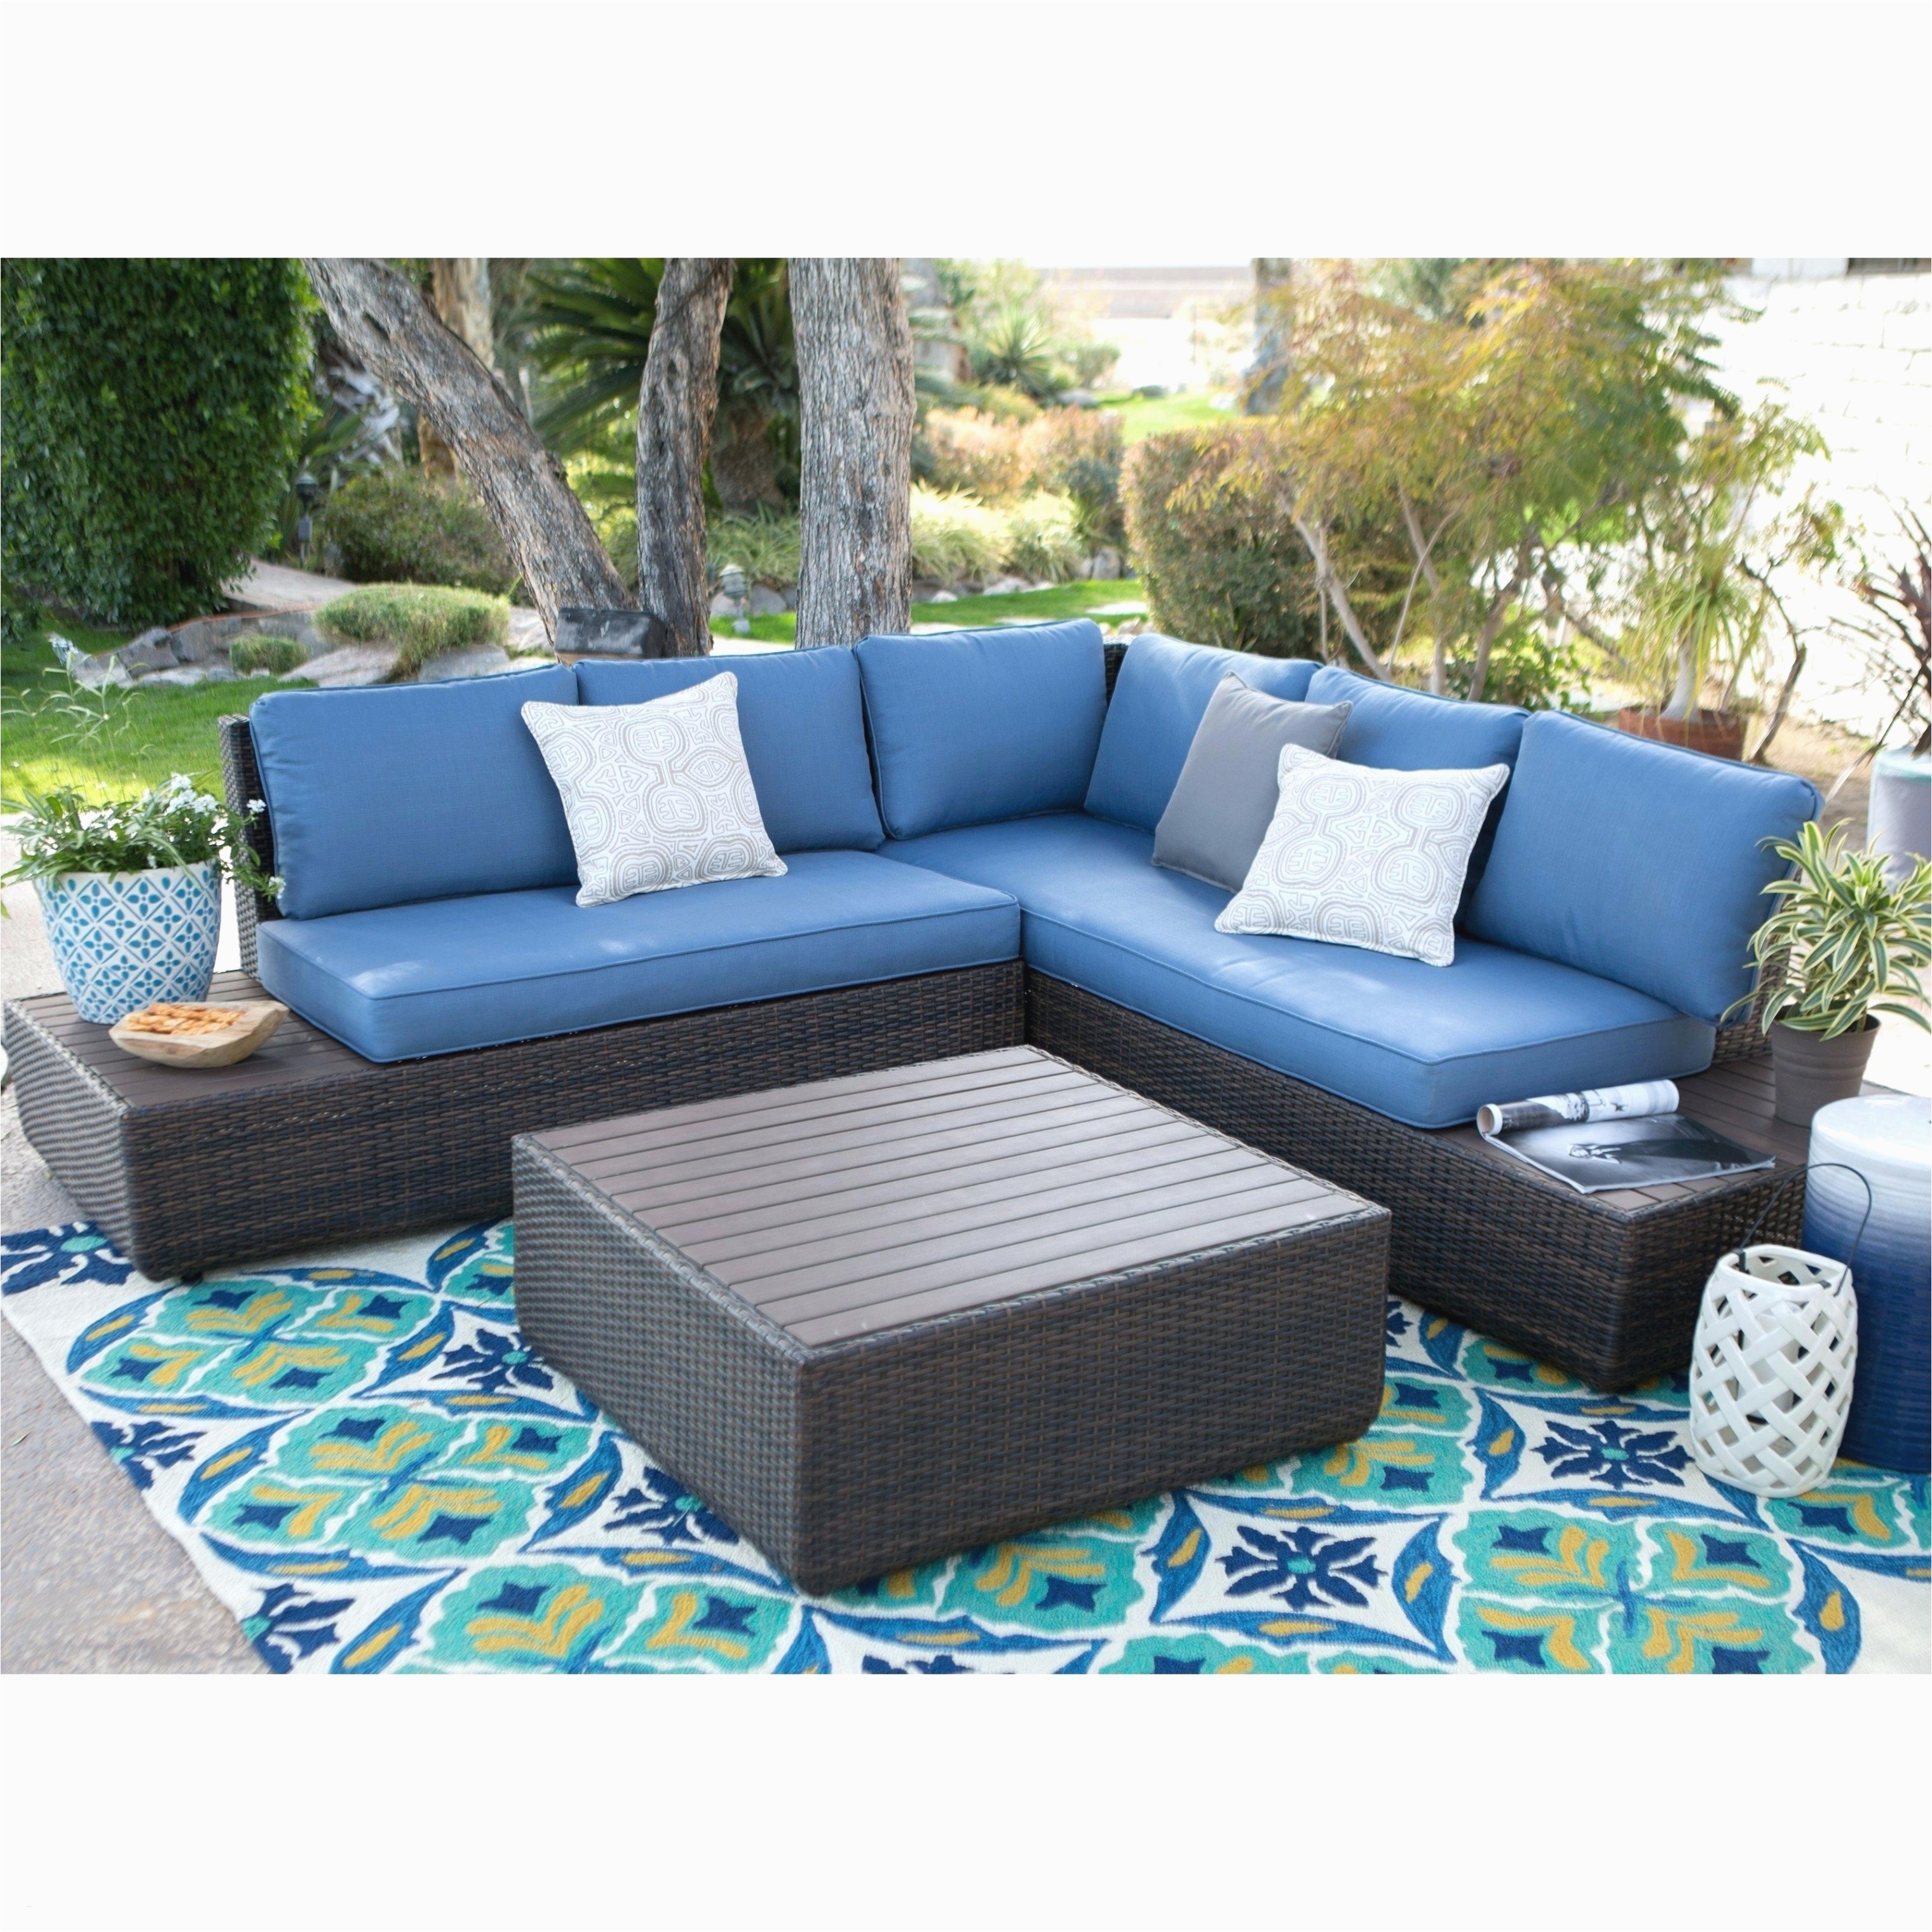 hochlehner sofa best ikea outdoor furniture inspirational herrlich wicker outdoor sofa 0d